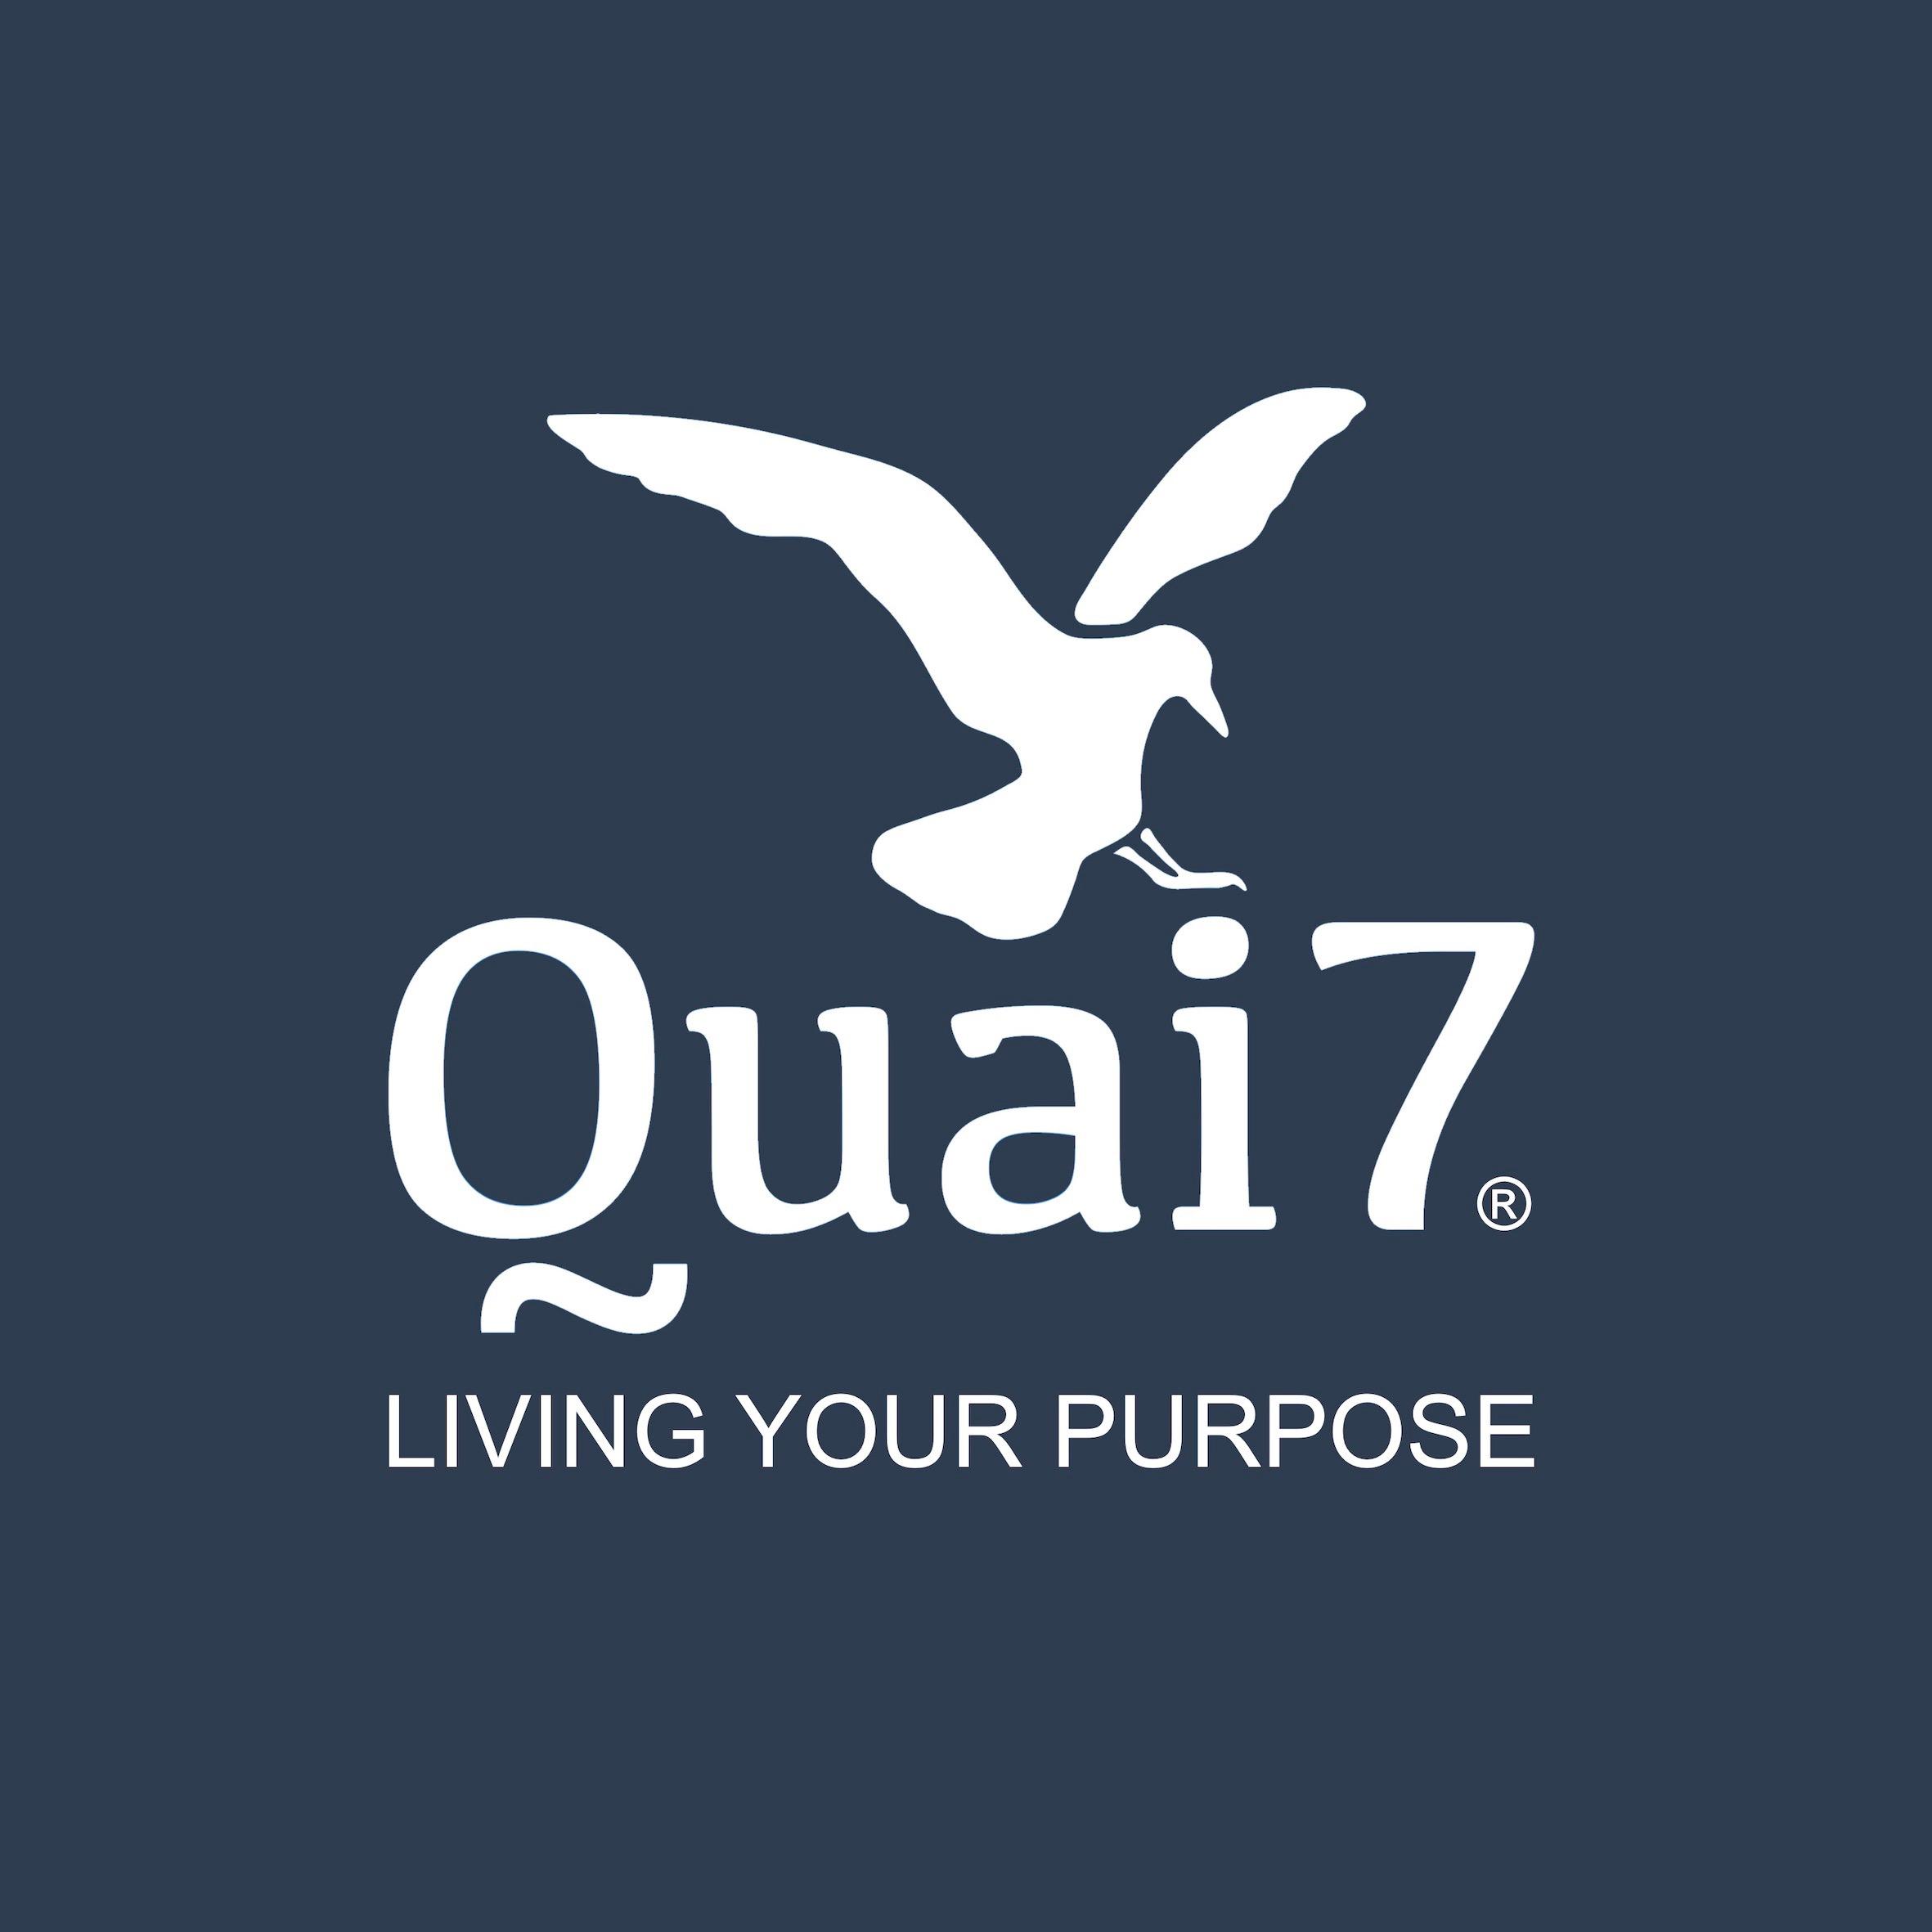 Quai7 GmbH Logo